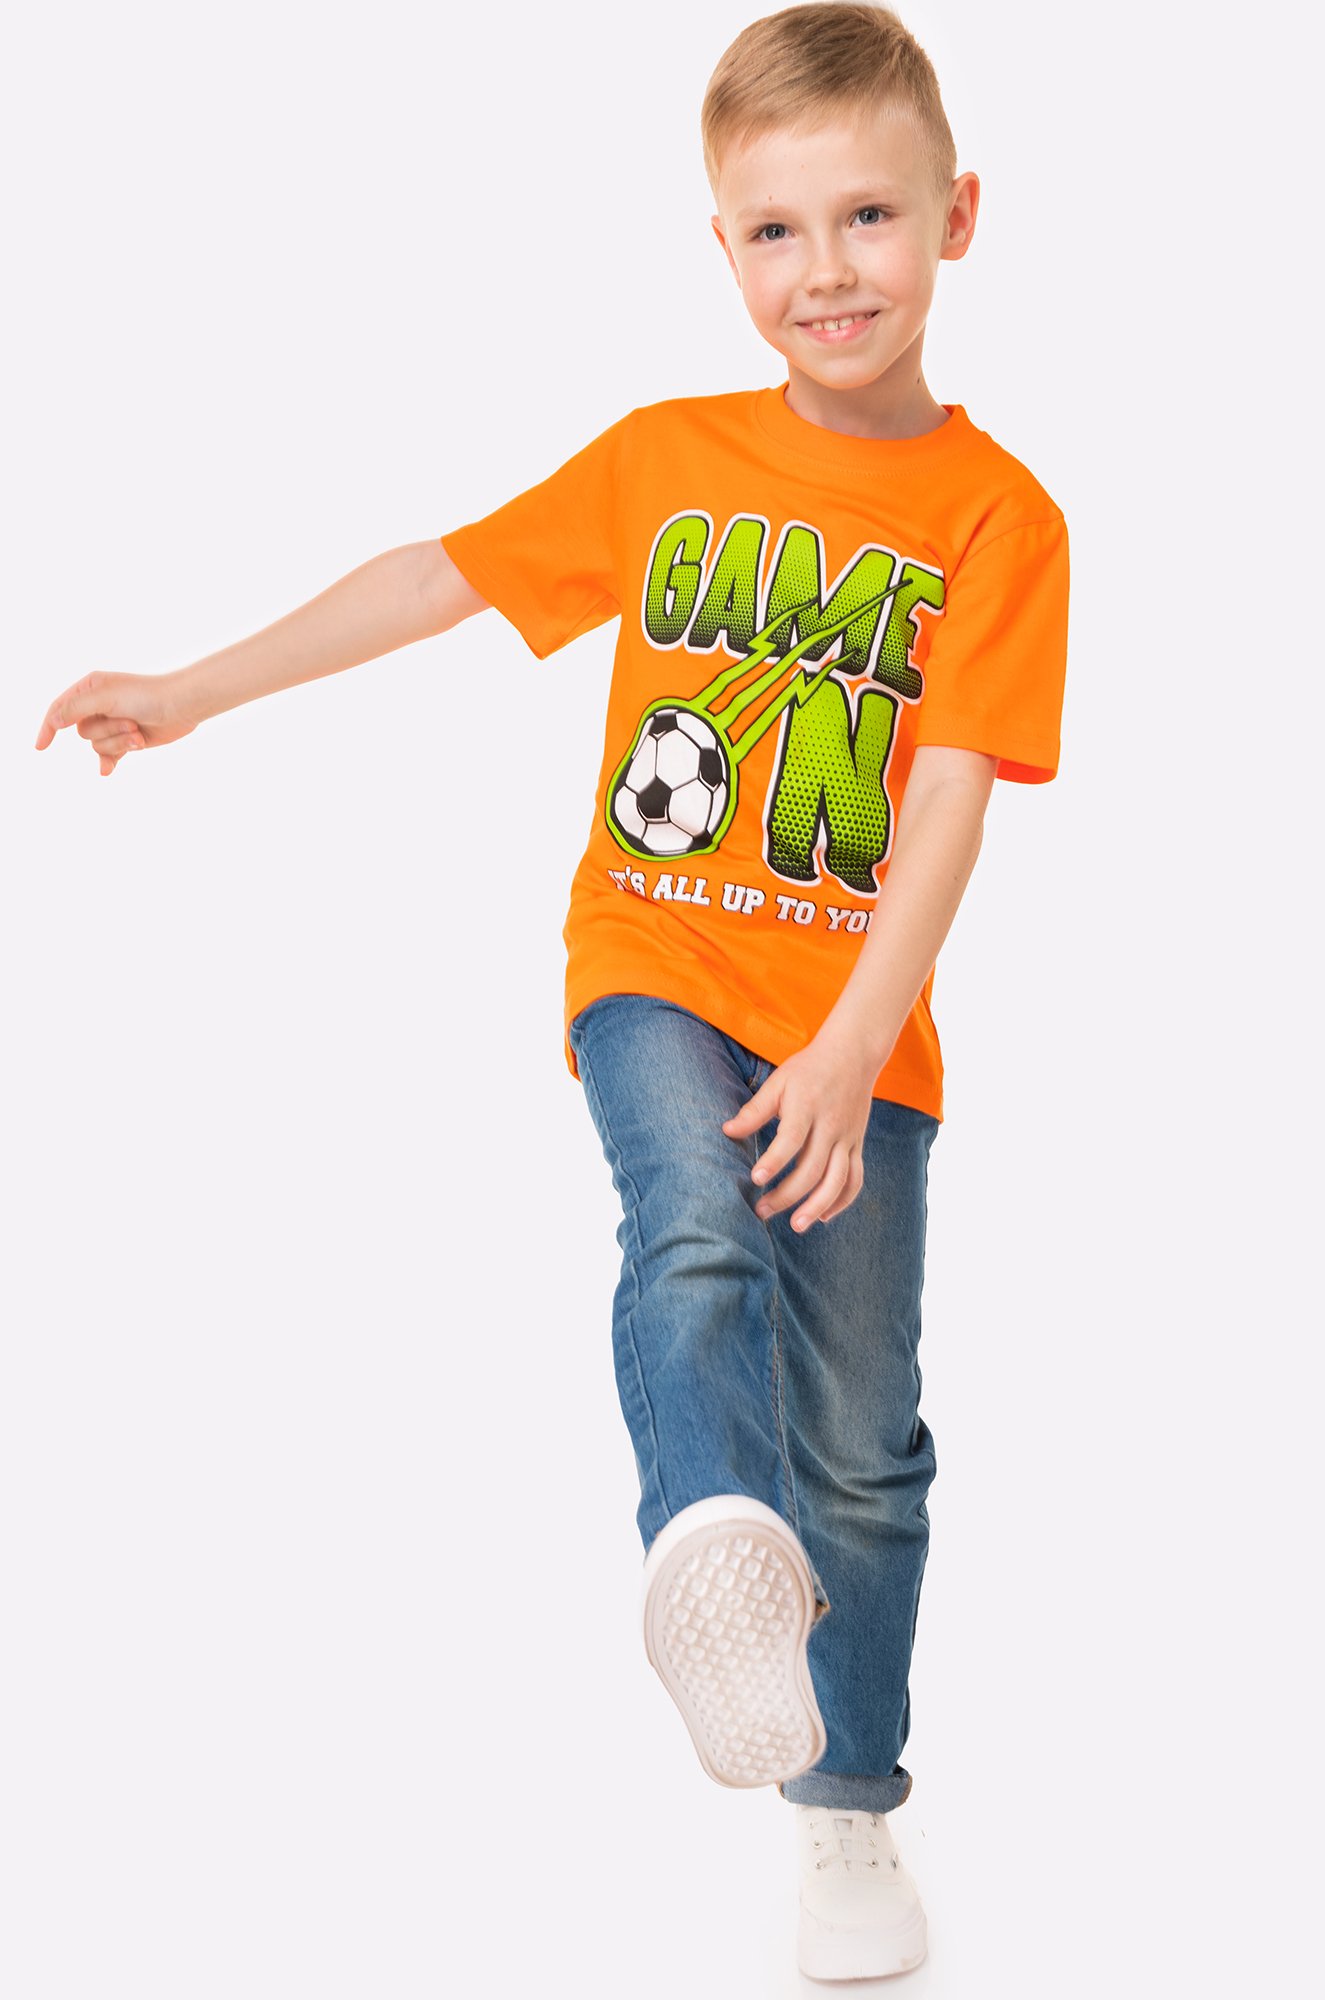 Футболка для мальчика Bonito